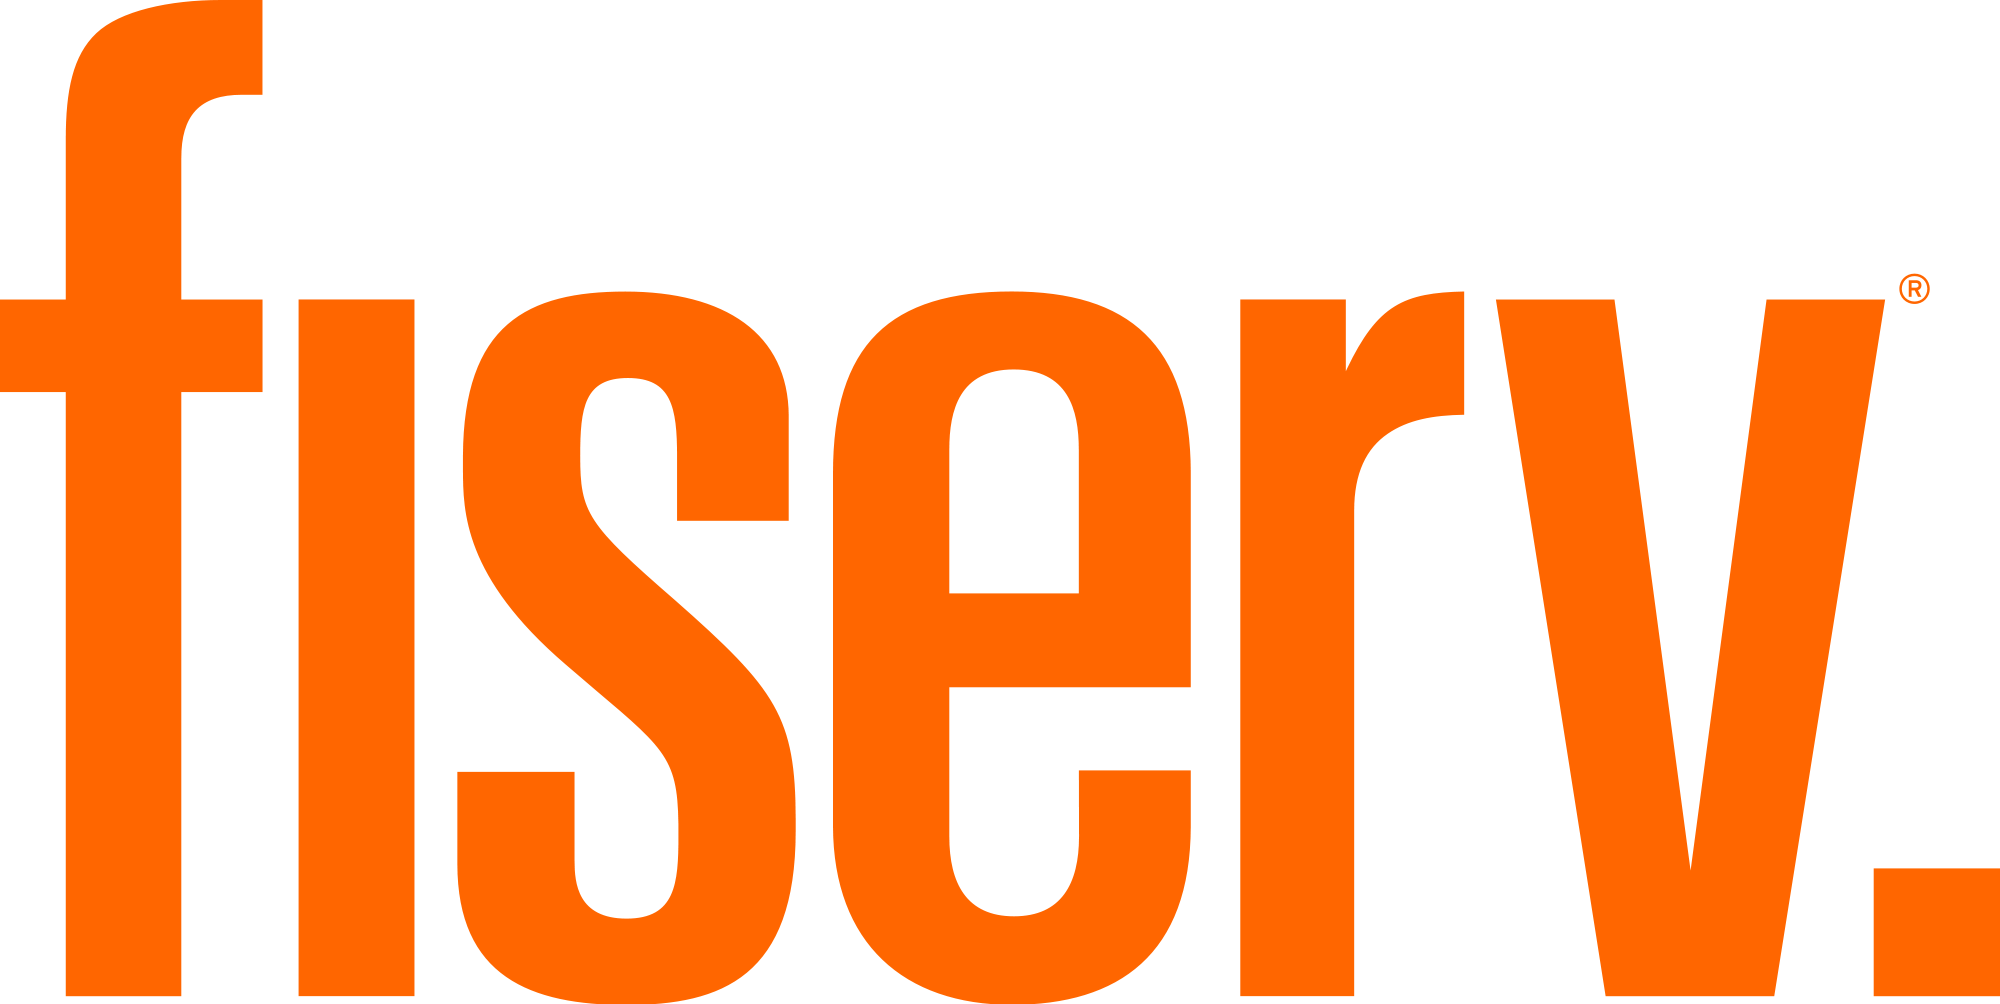 Fiserv. Brand Logo